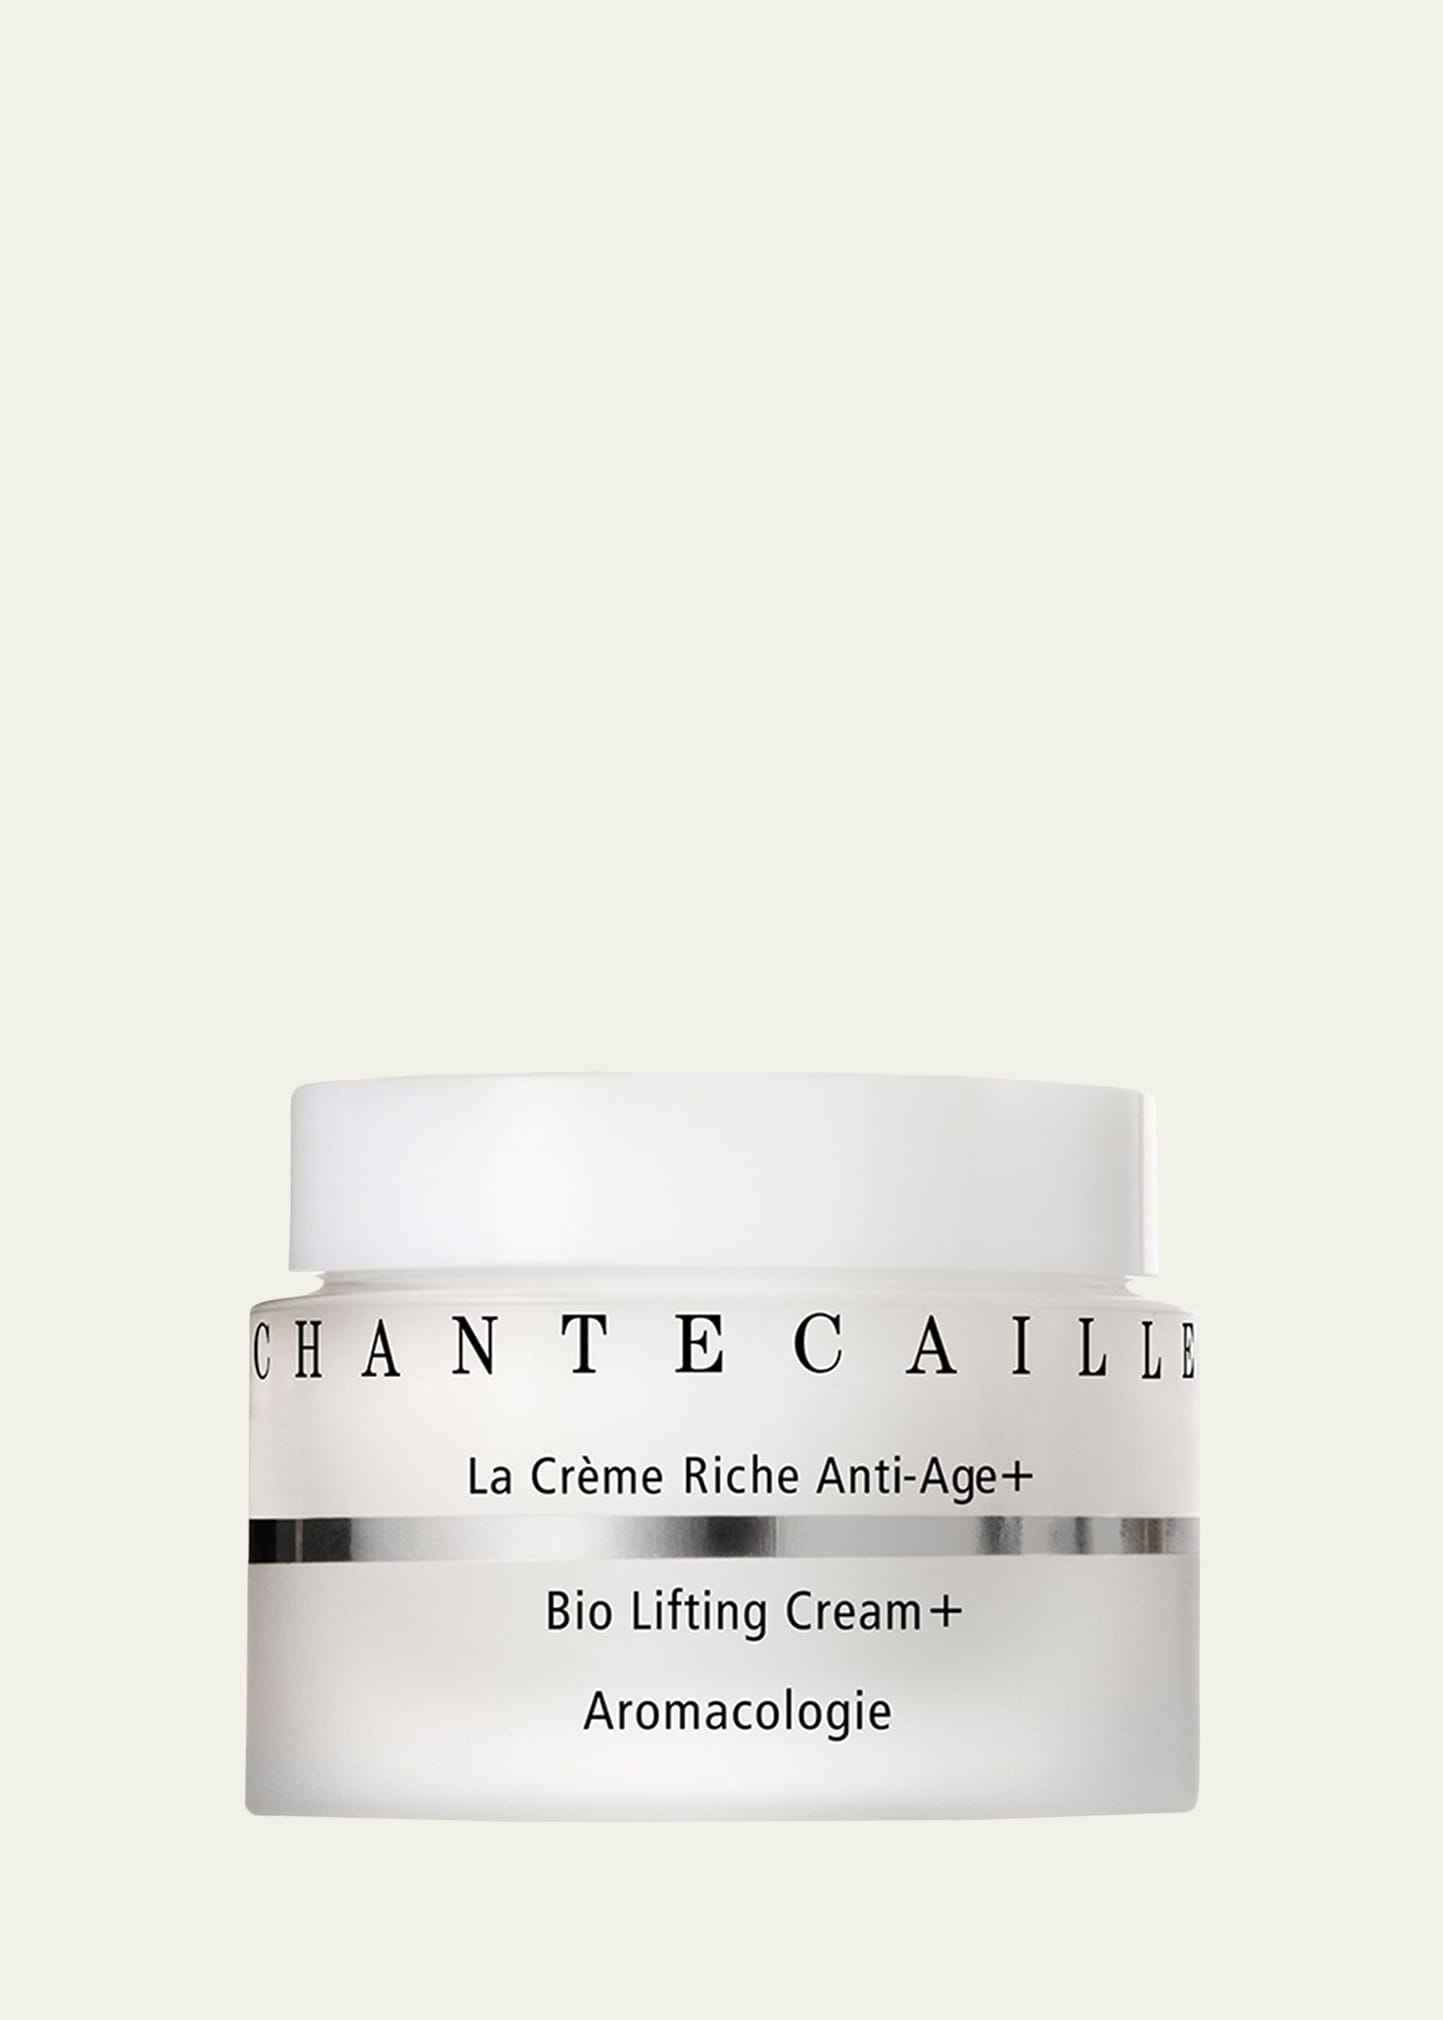 Bio Lifting Cream +, 1.7 oz.